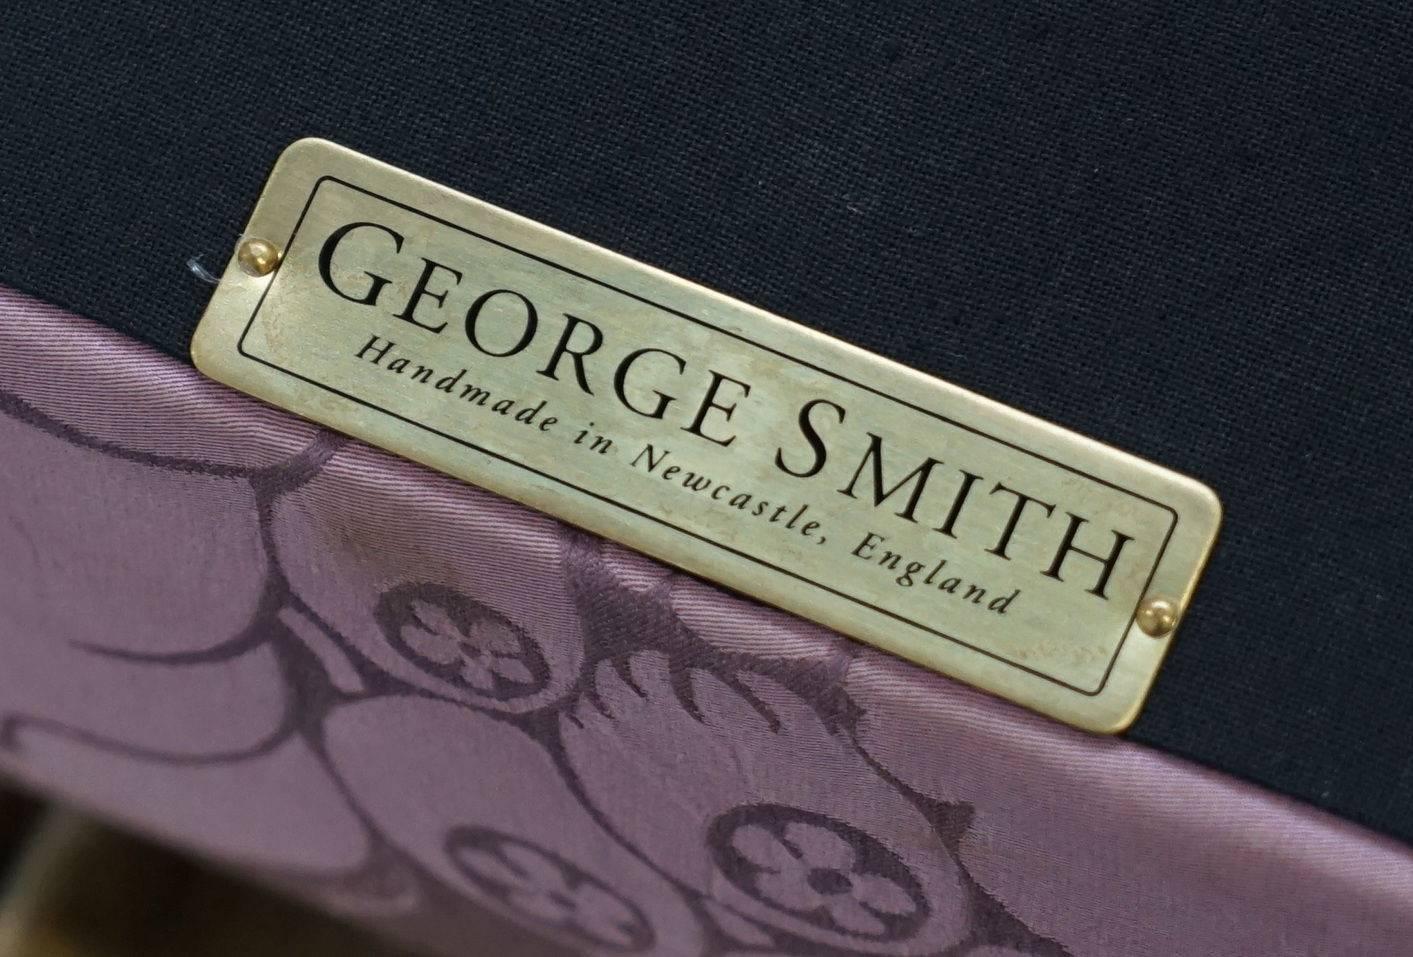 British George Smith Fender Footstool Ottoman Silk and Silk Velvet Floral Fabric